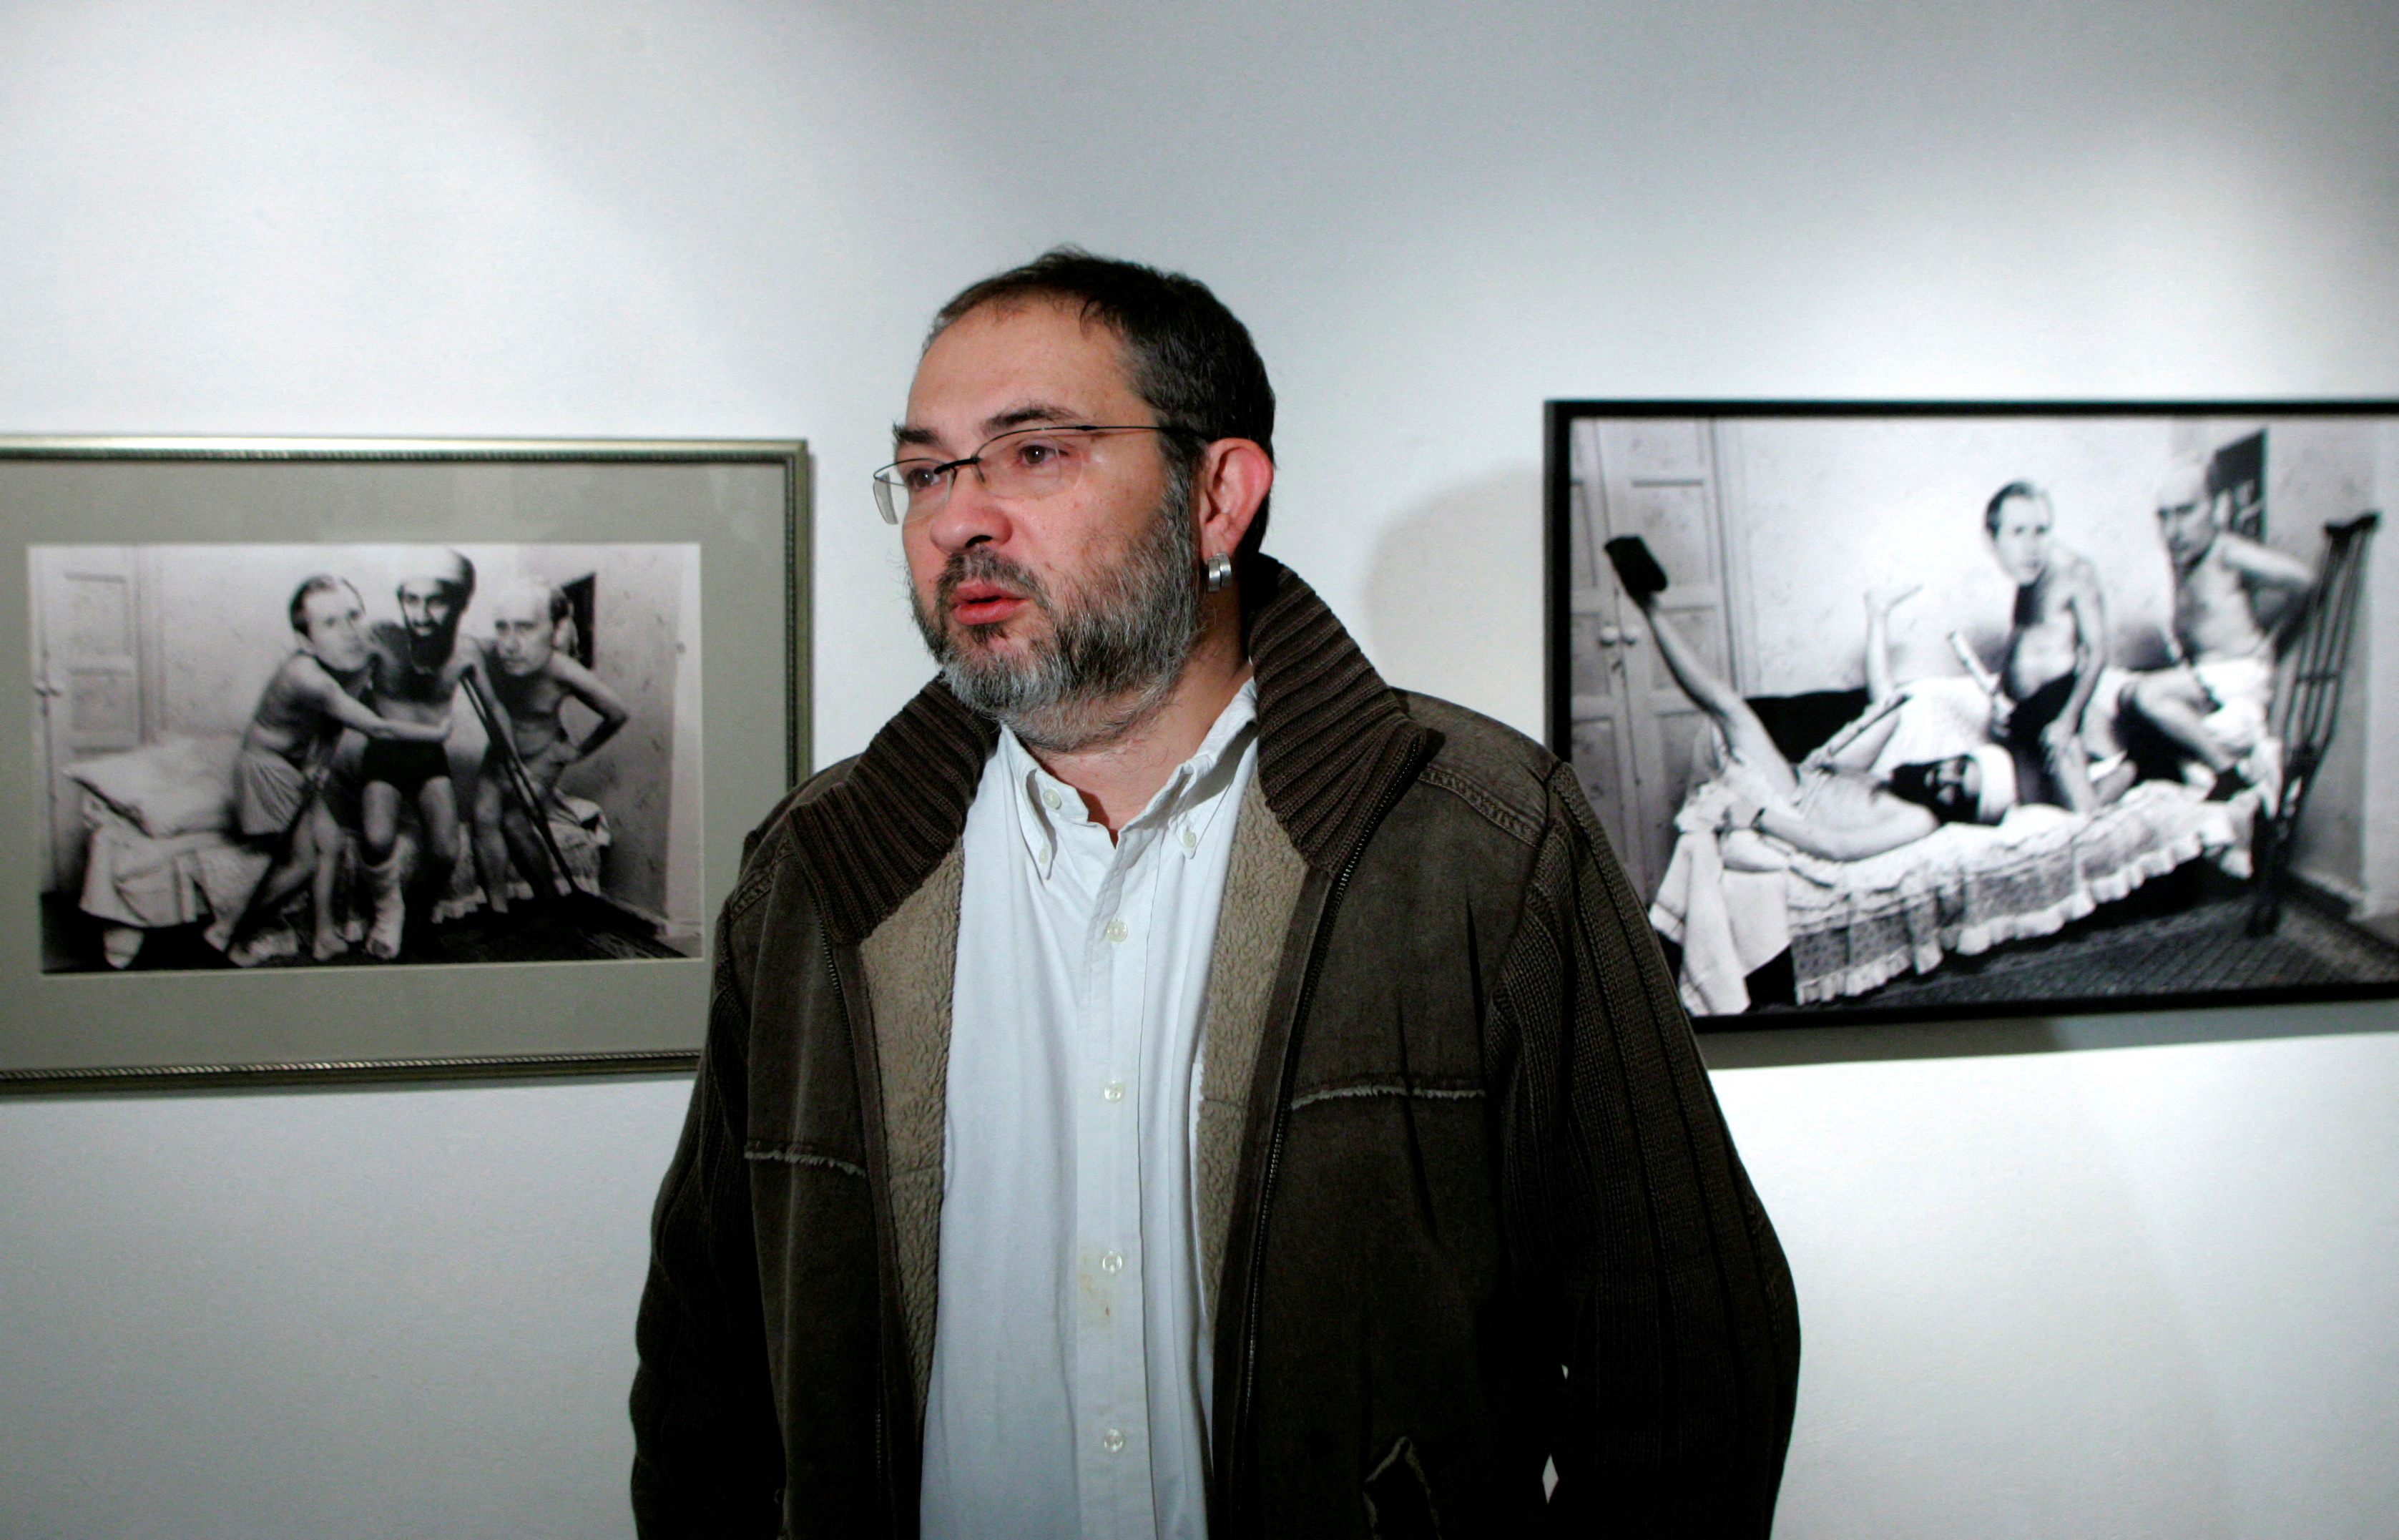 Gallery owner Marat Gelman